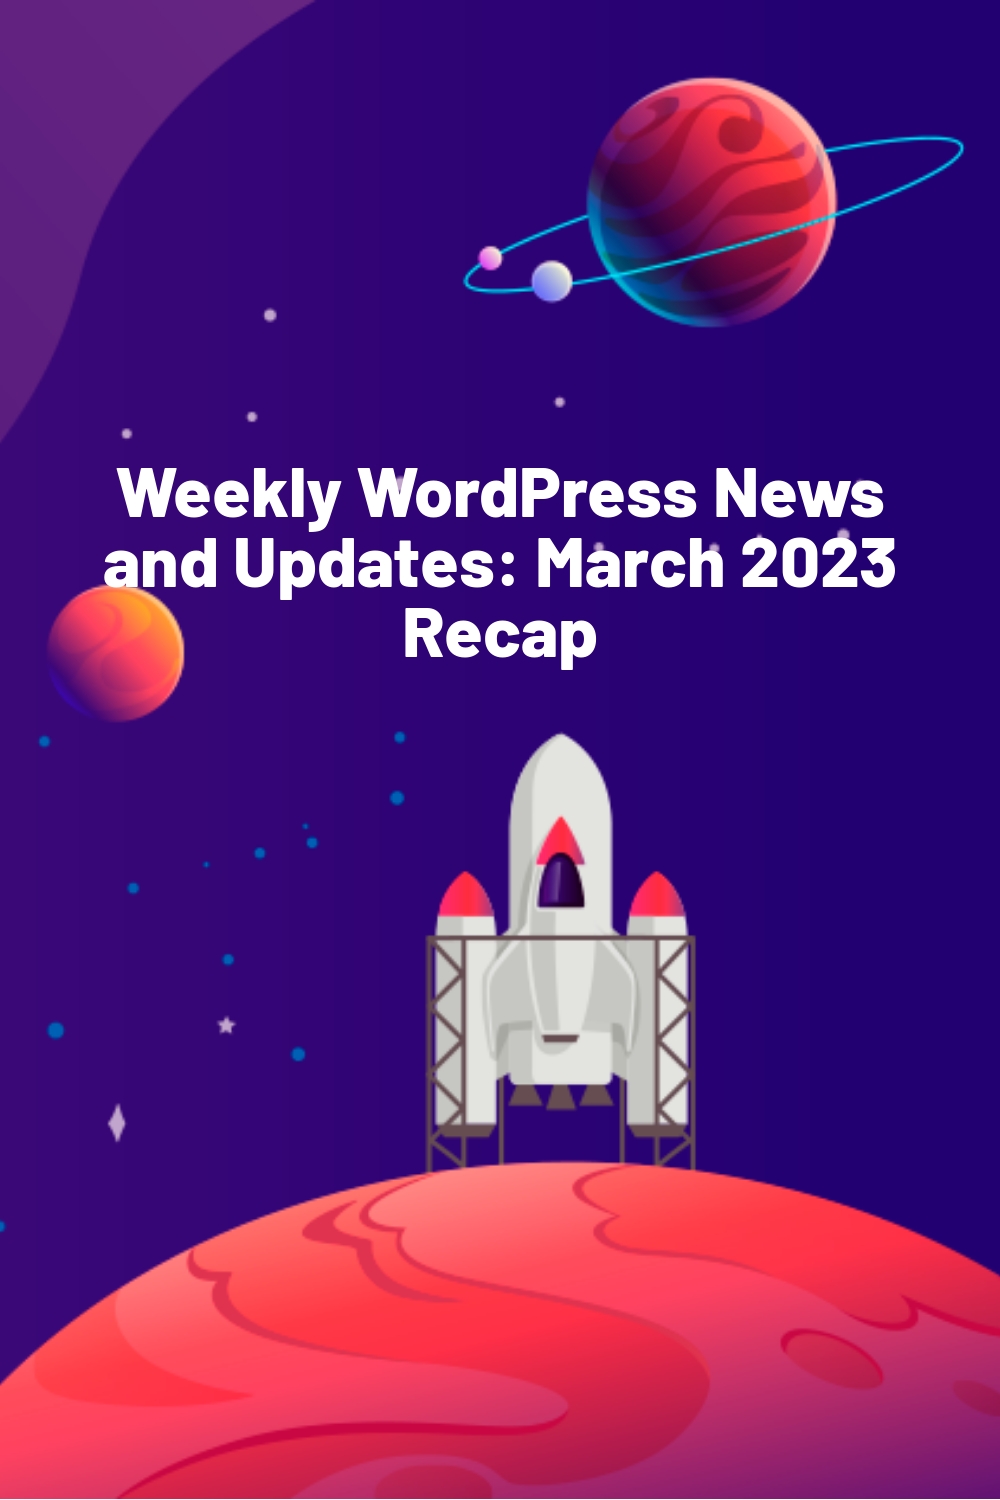 Weekly WordPress News and Updates: March 2023 Recap